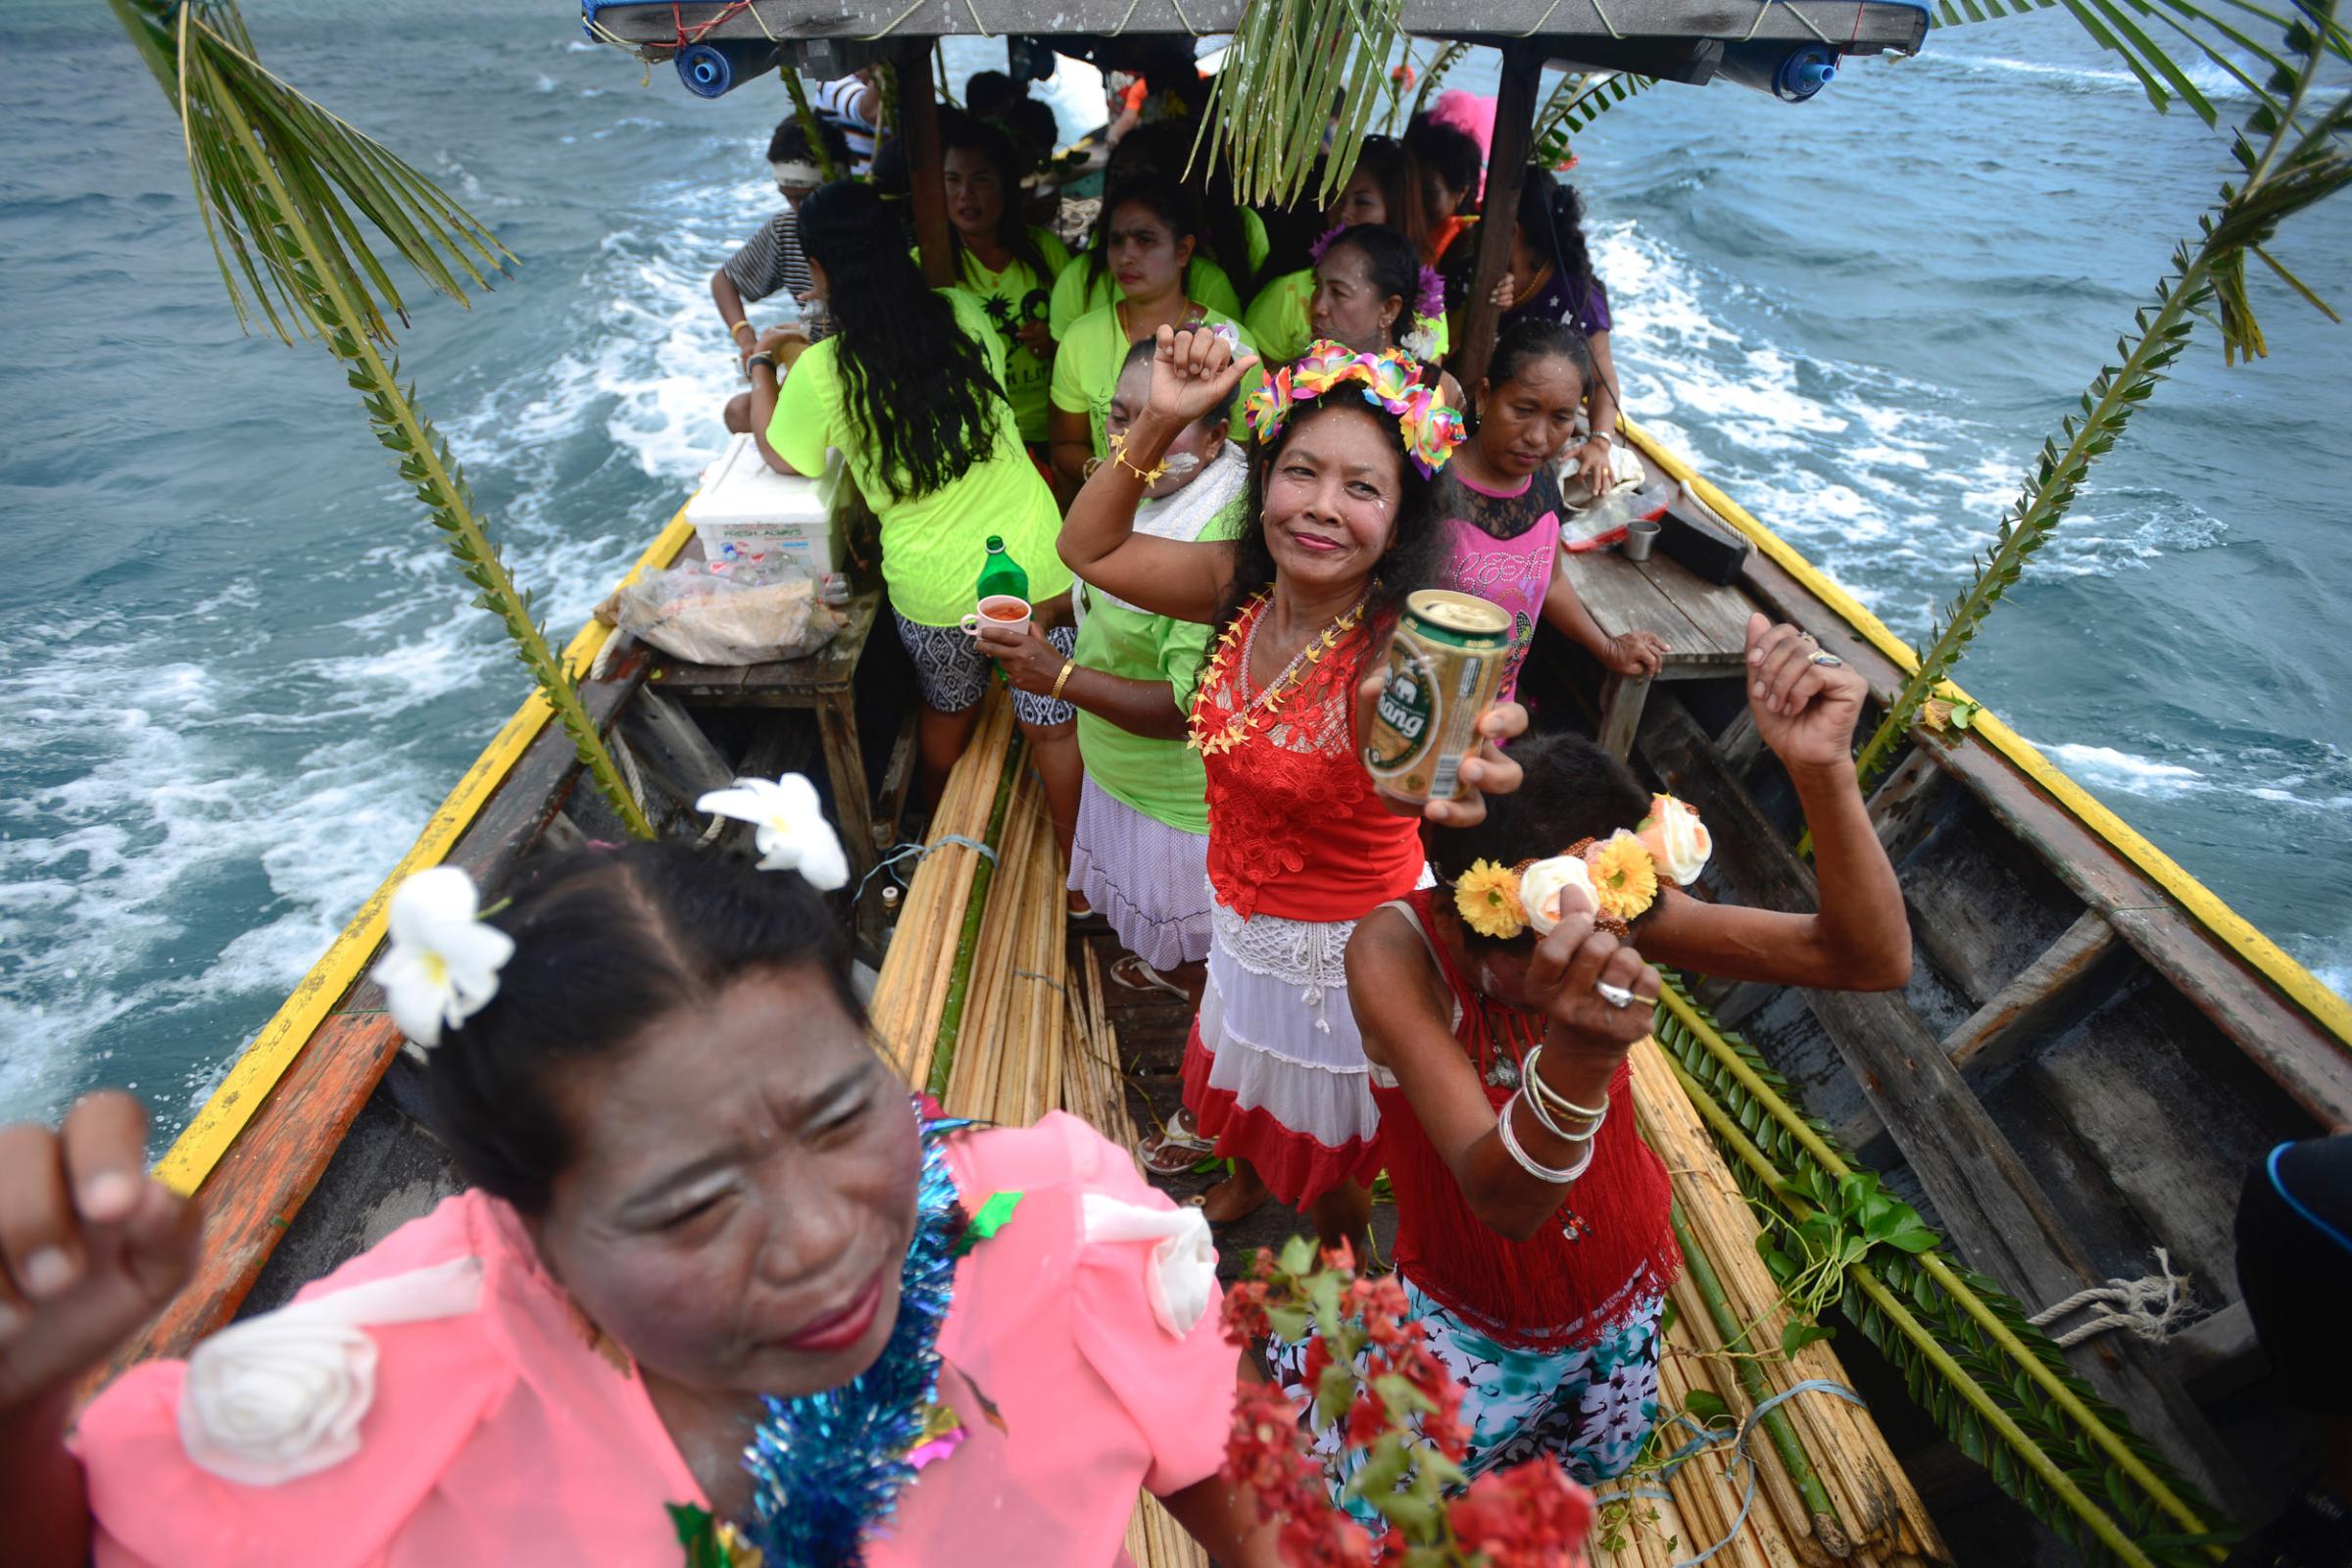 Lipe Island - Sea gypsies celebrate on a boat carrying the Salacca tree...